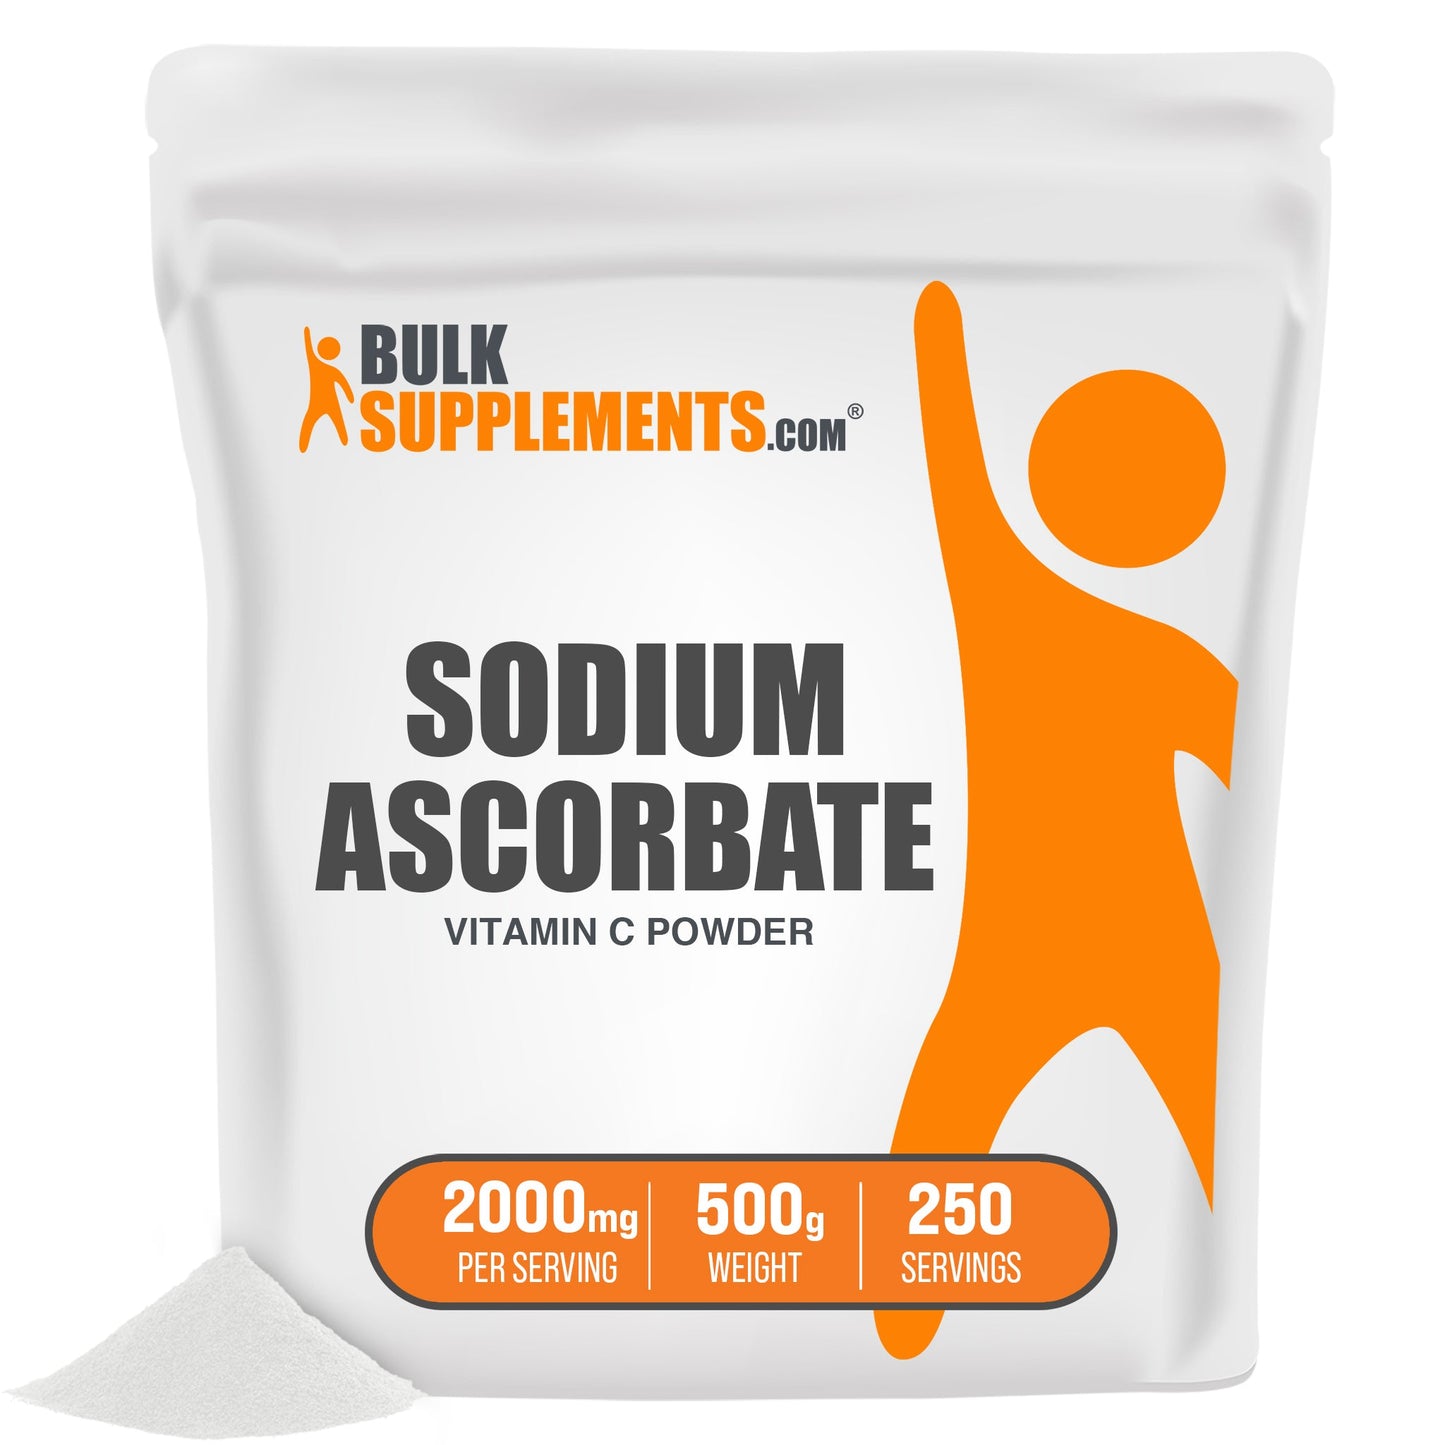 Bulk Supplements.com Sodium Ascorbate